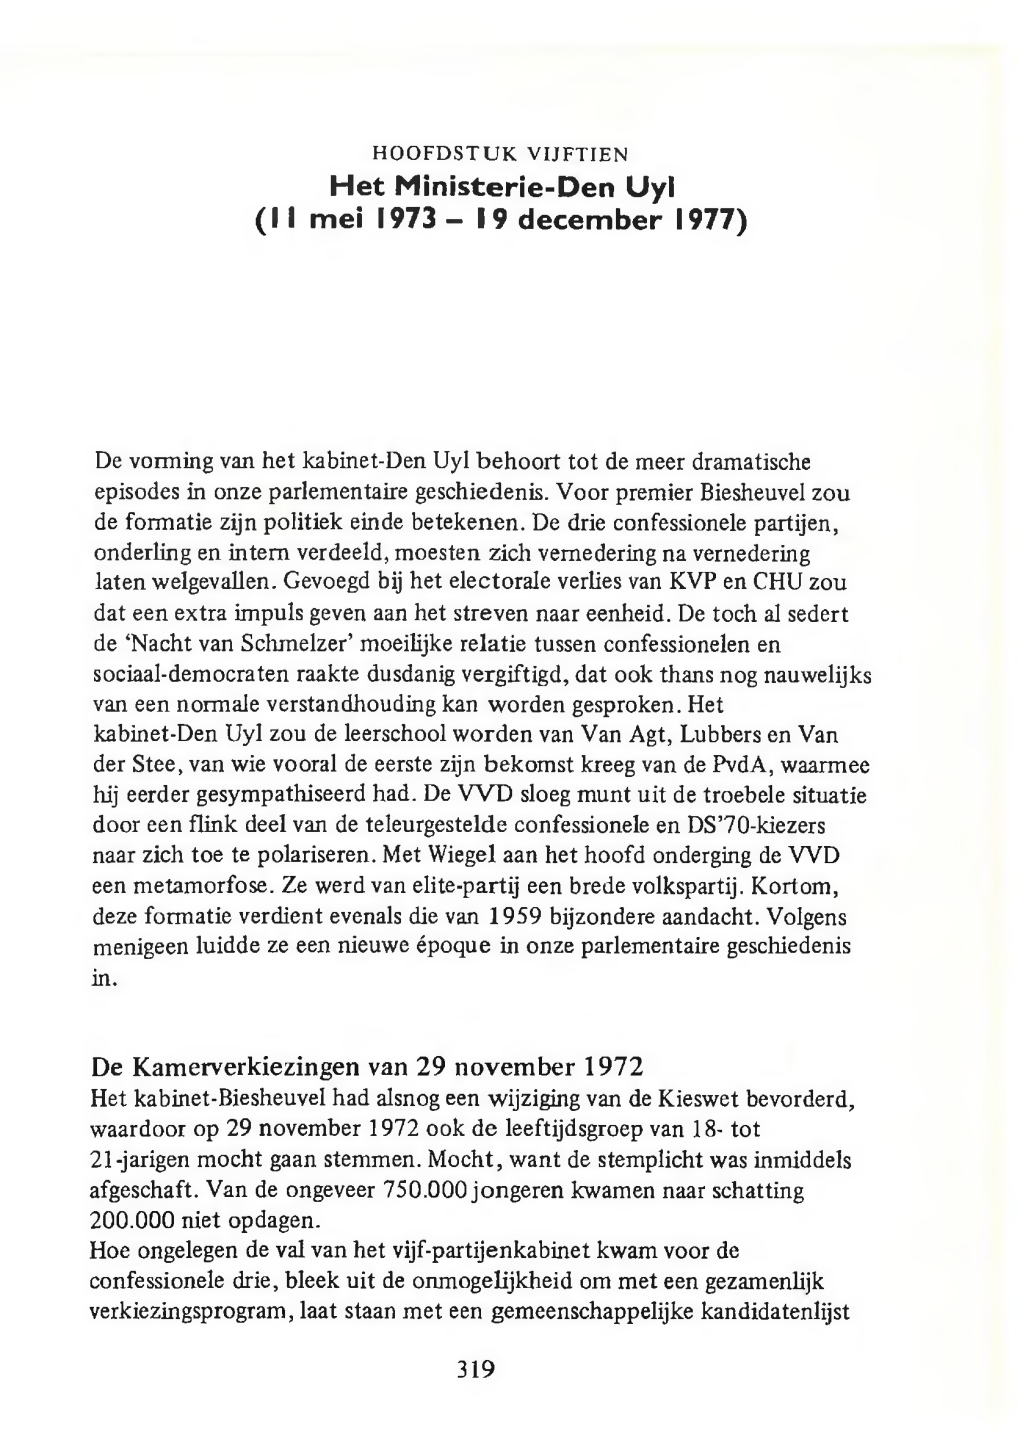 Het Ministerie-Den Uyl (II Mei 1973 - 19 December 1977)